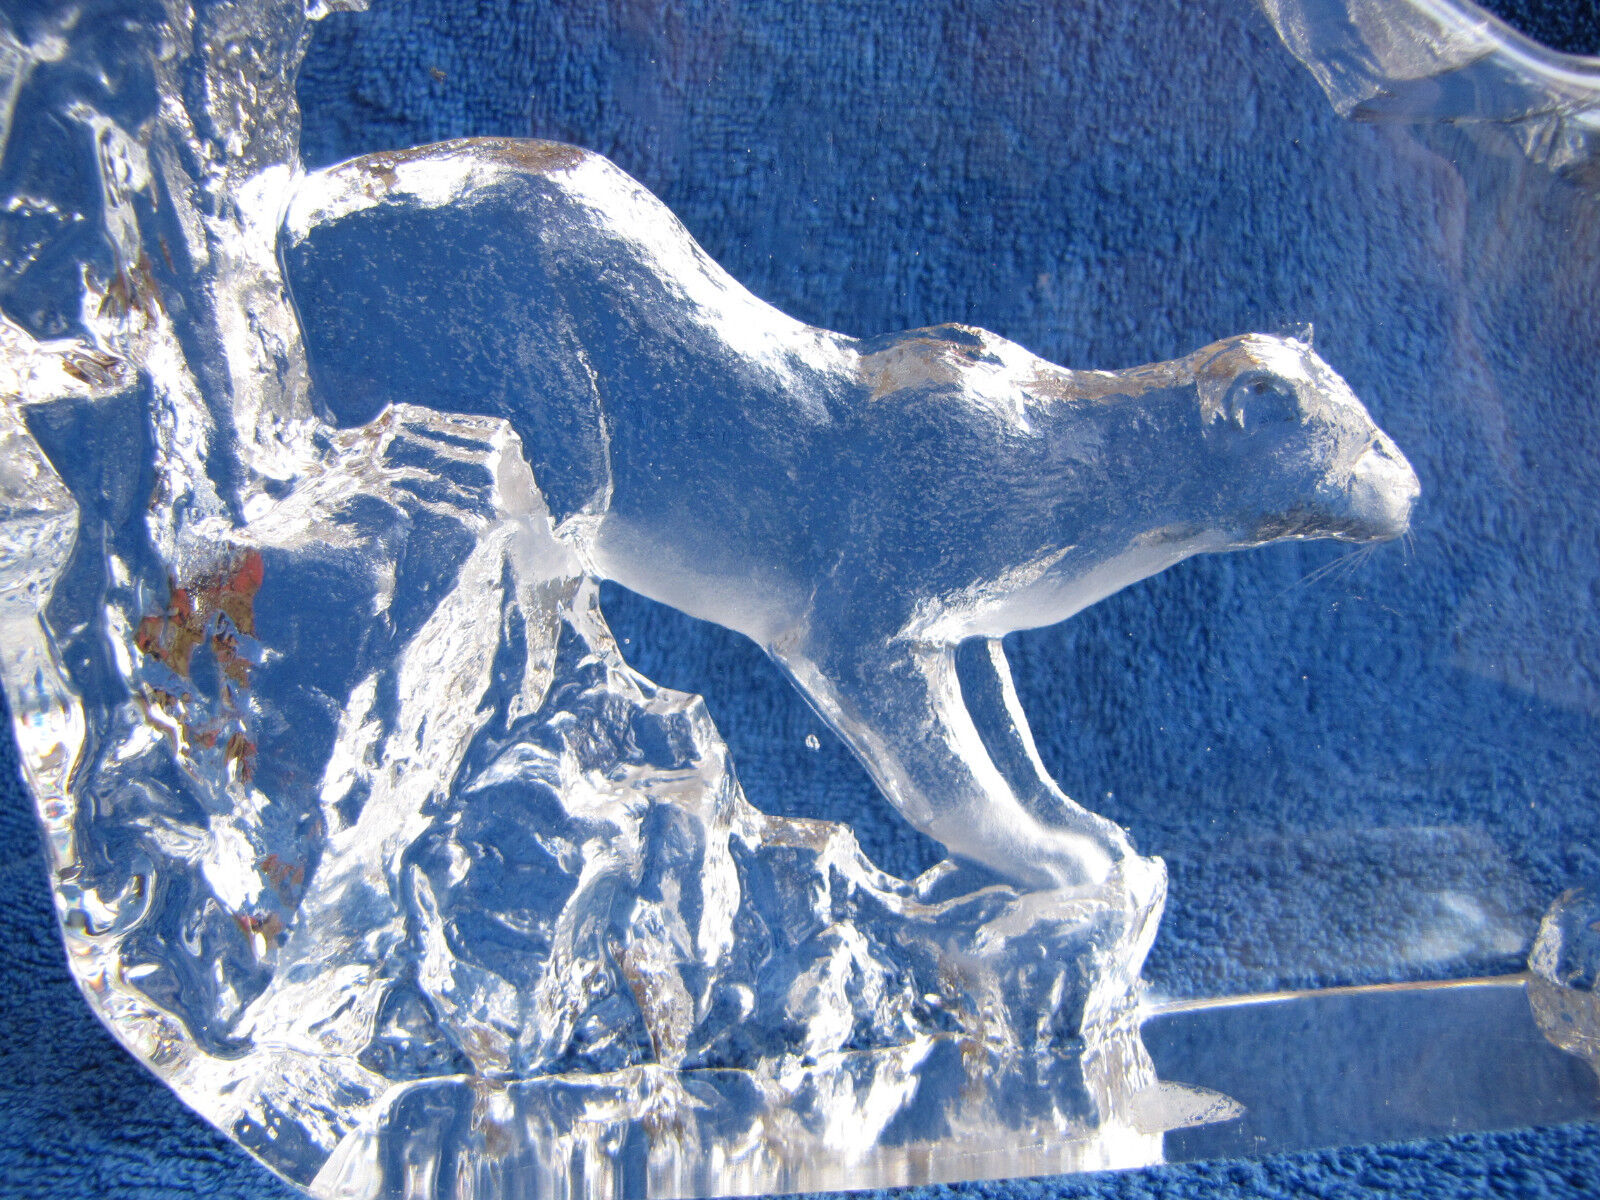 Sweden Kosta Orrefors Art Glass figurine animal PUMA cheetah WWF BIG paperweight